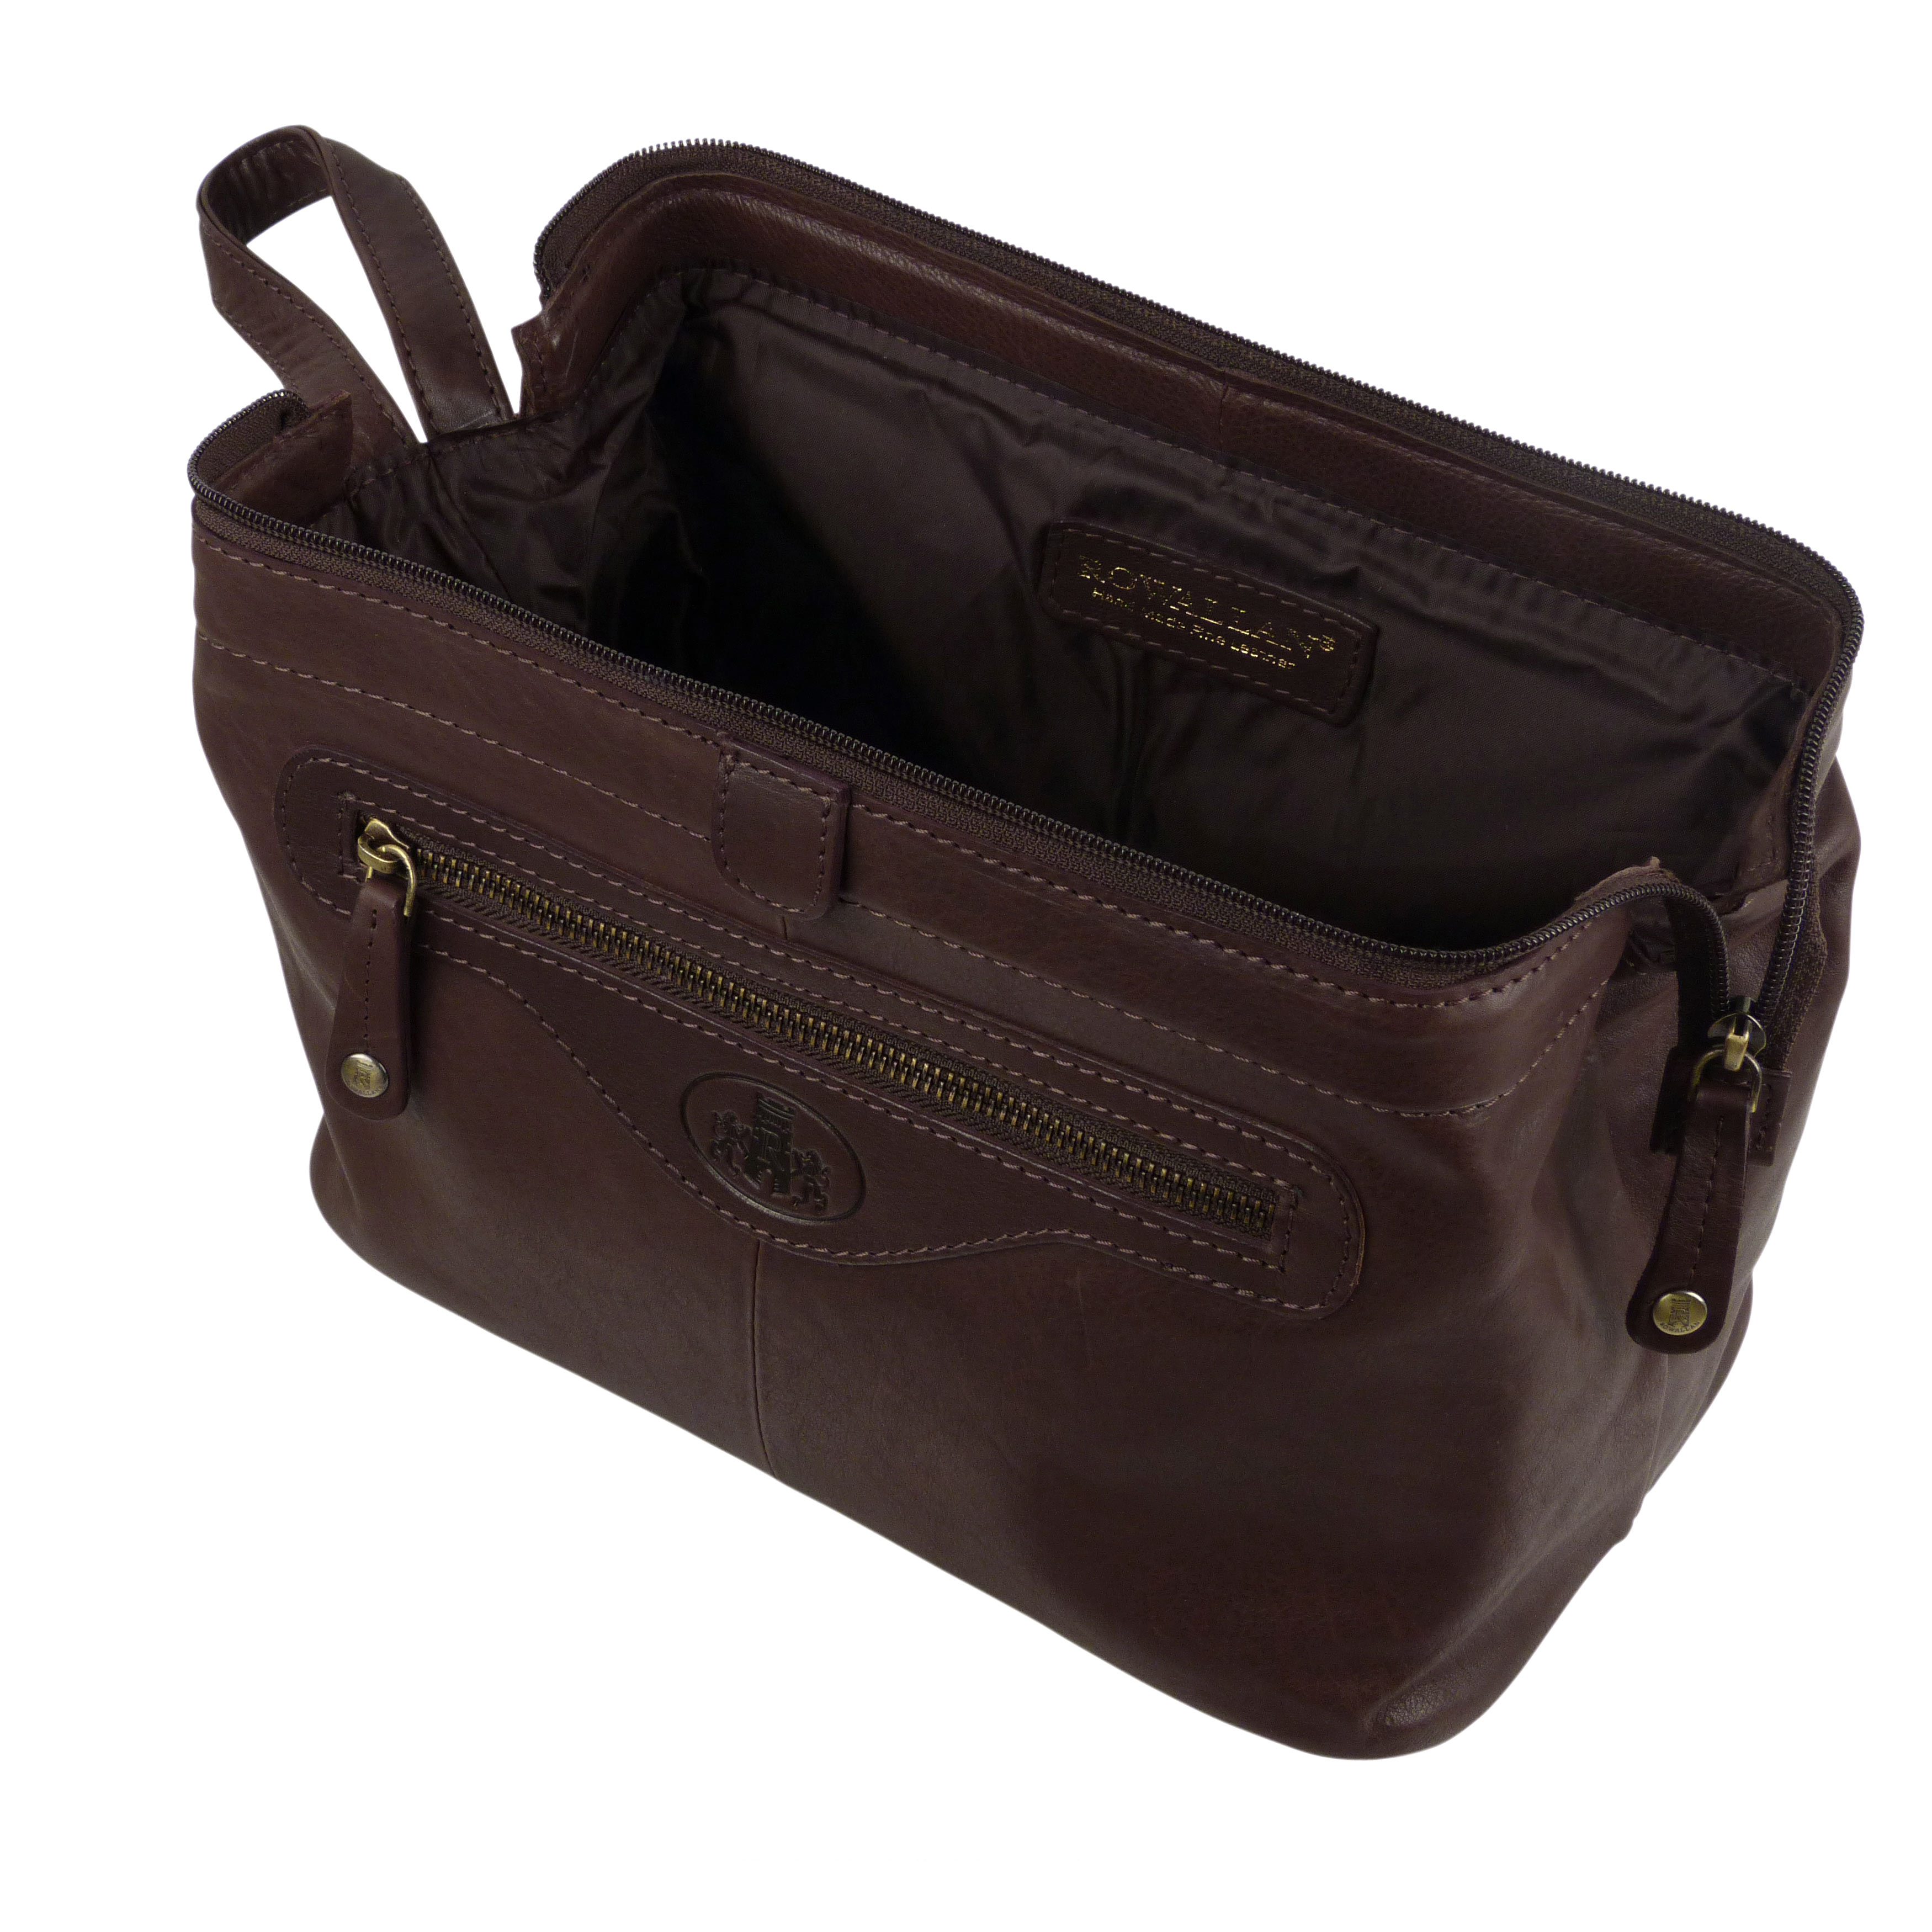 Mens Rowallan Large Quality Vintage Leather Wash Bag Travel Toiletries Black or | eBay